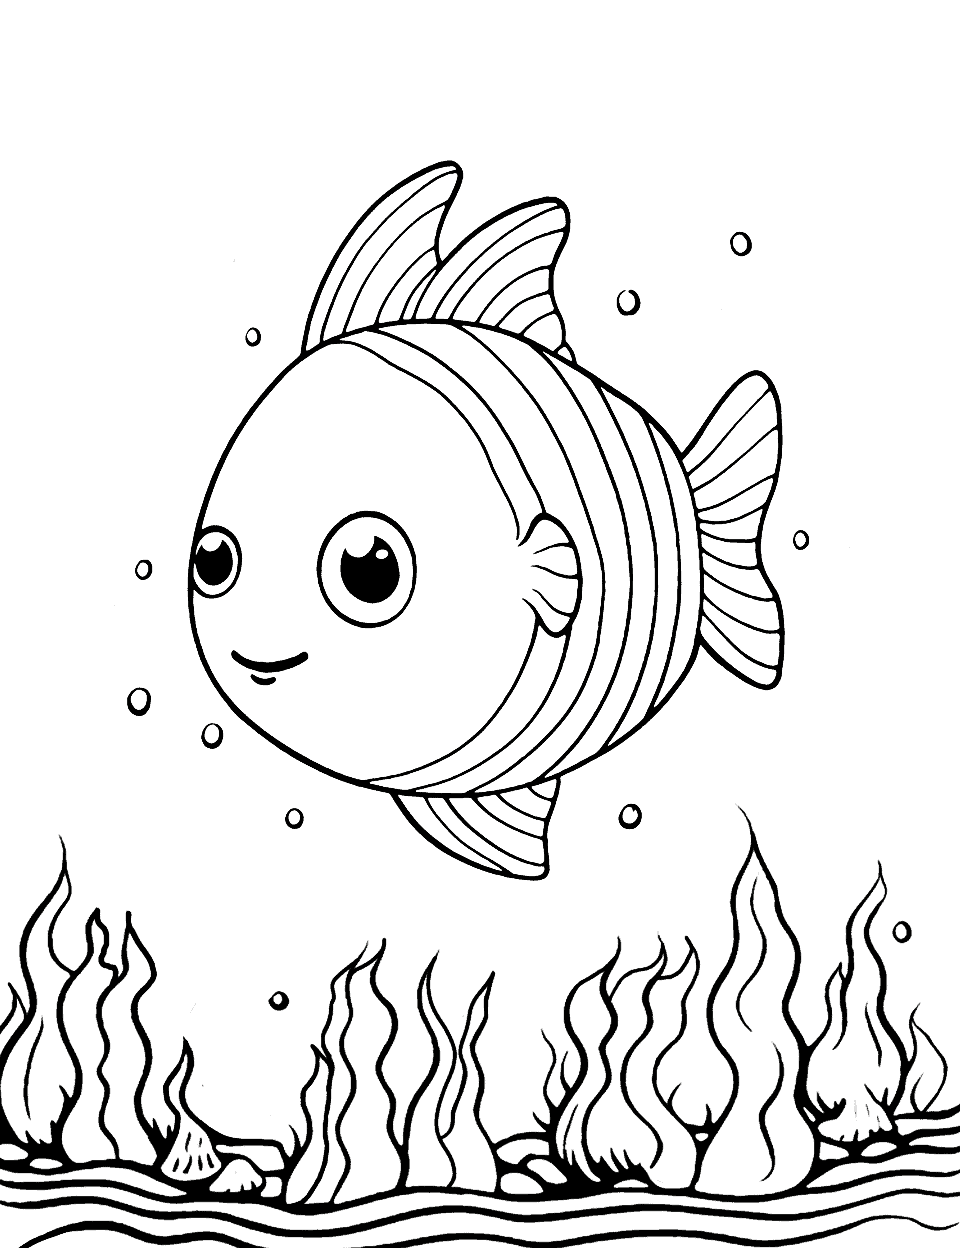 Seagrass Adventure Fish Coloring Page - Fish swimming around a deep-sea seagrass